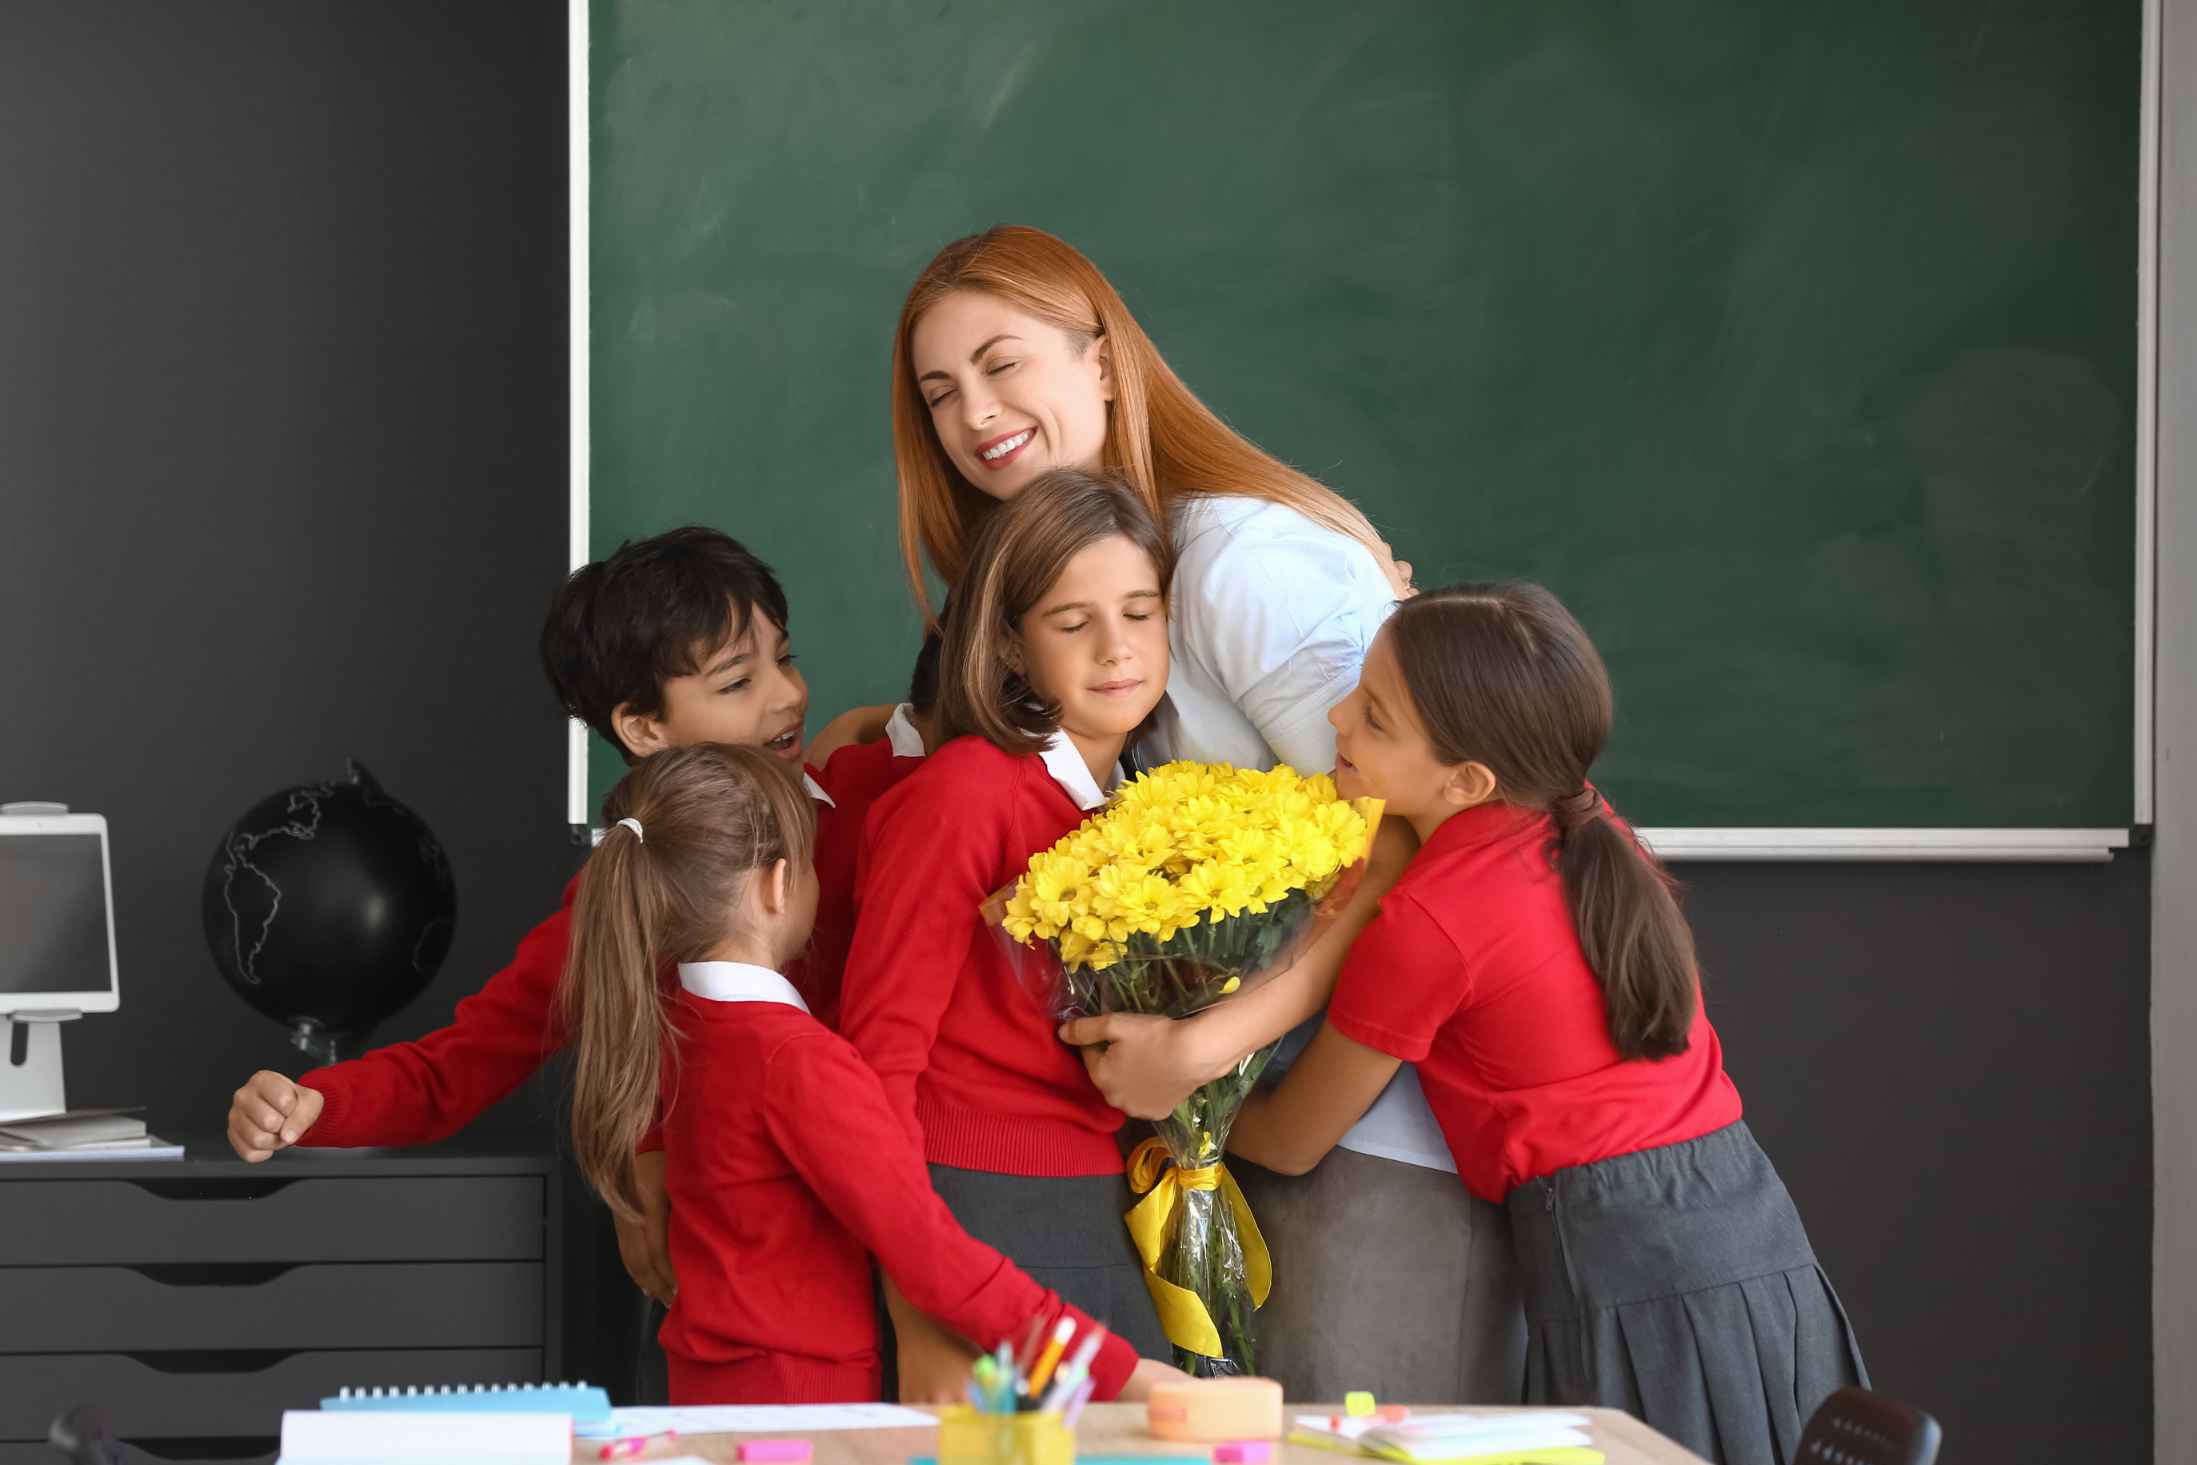 School children wishing their teacher in classroom with yellow flowers